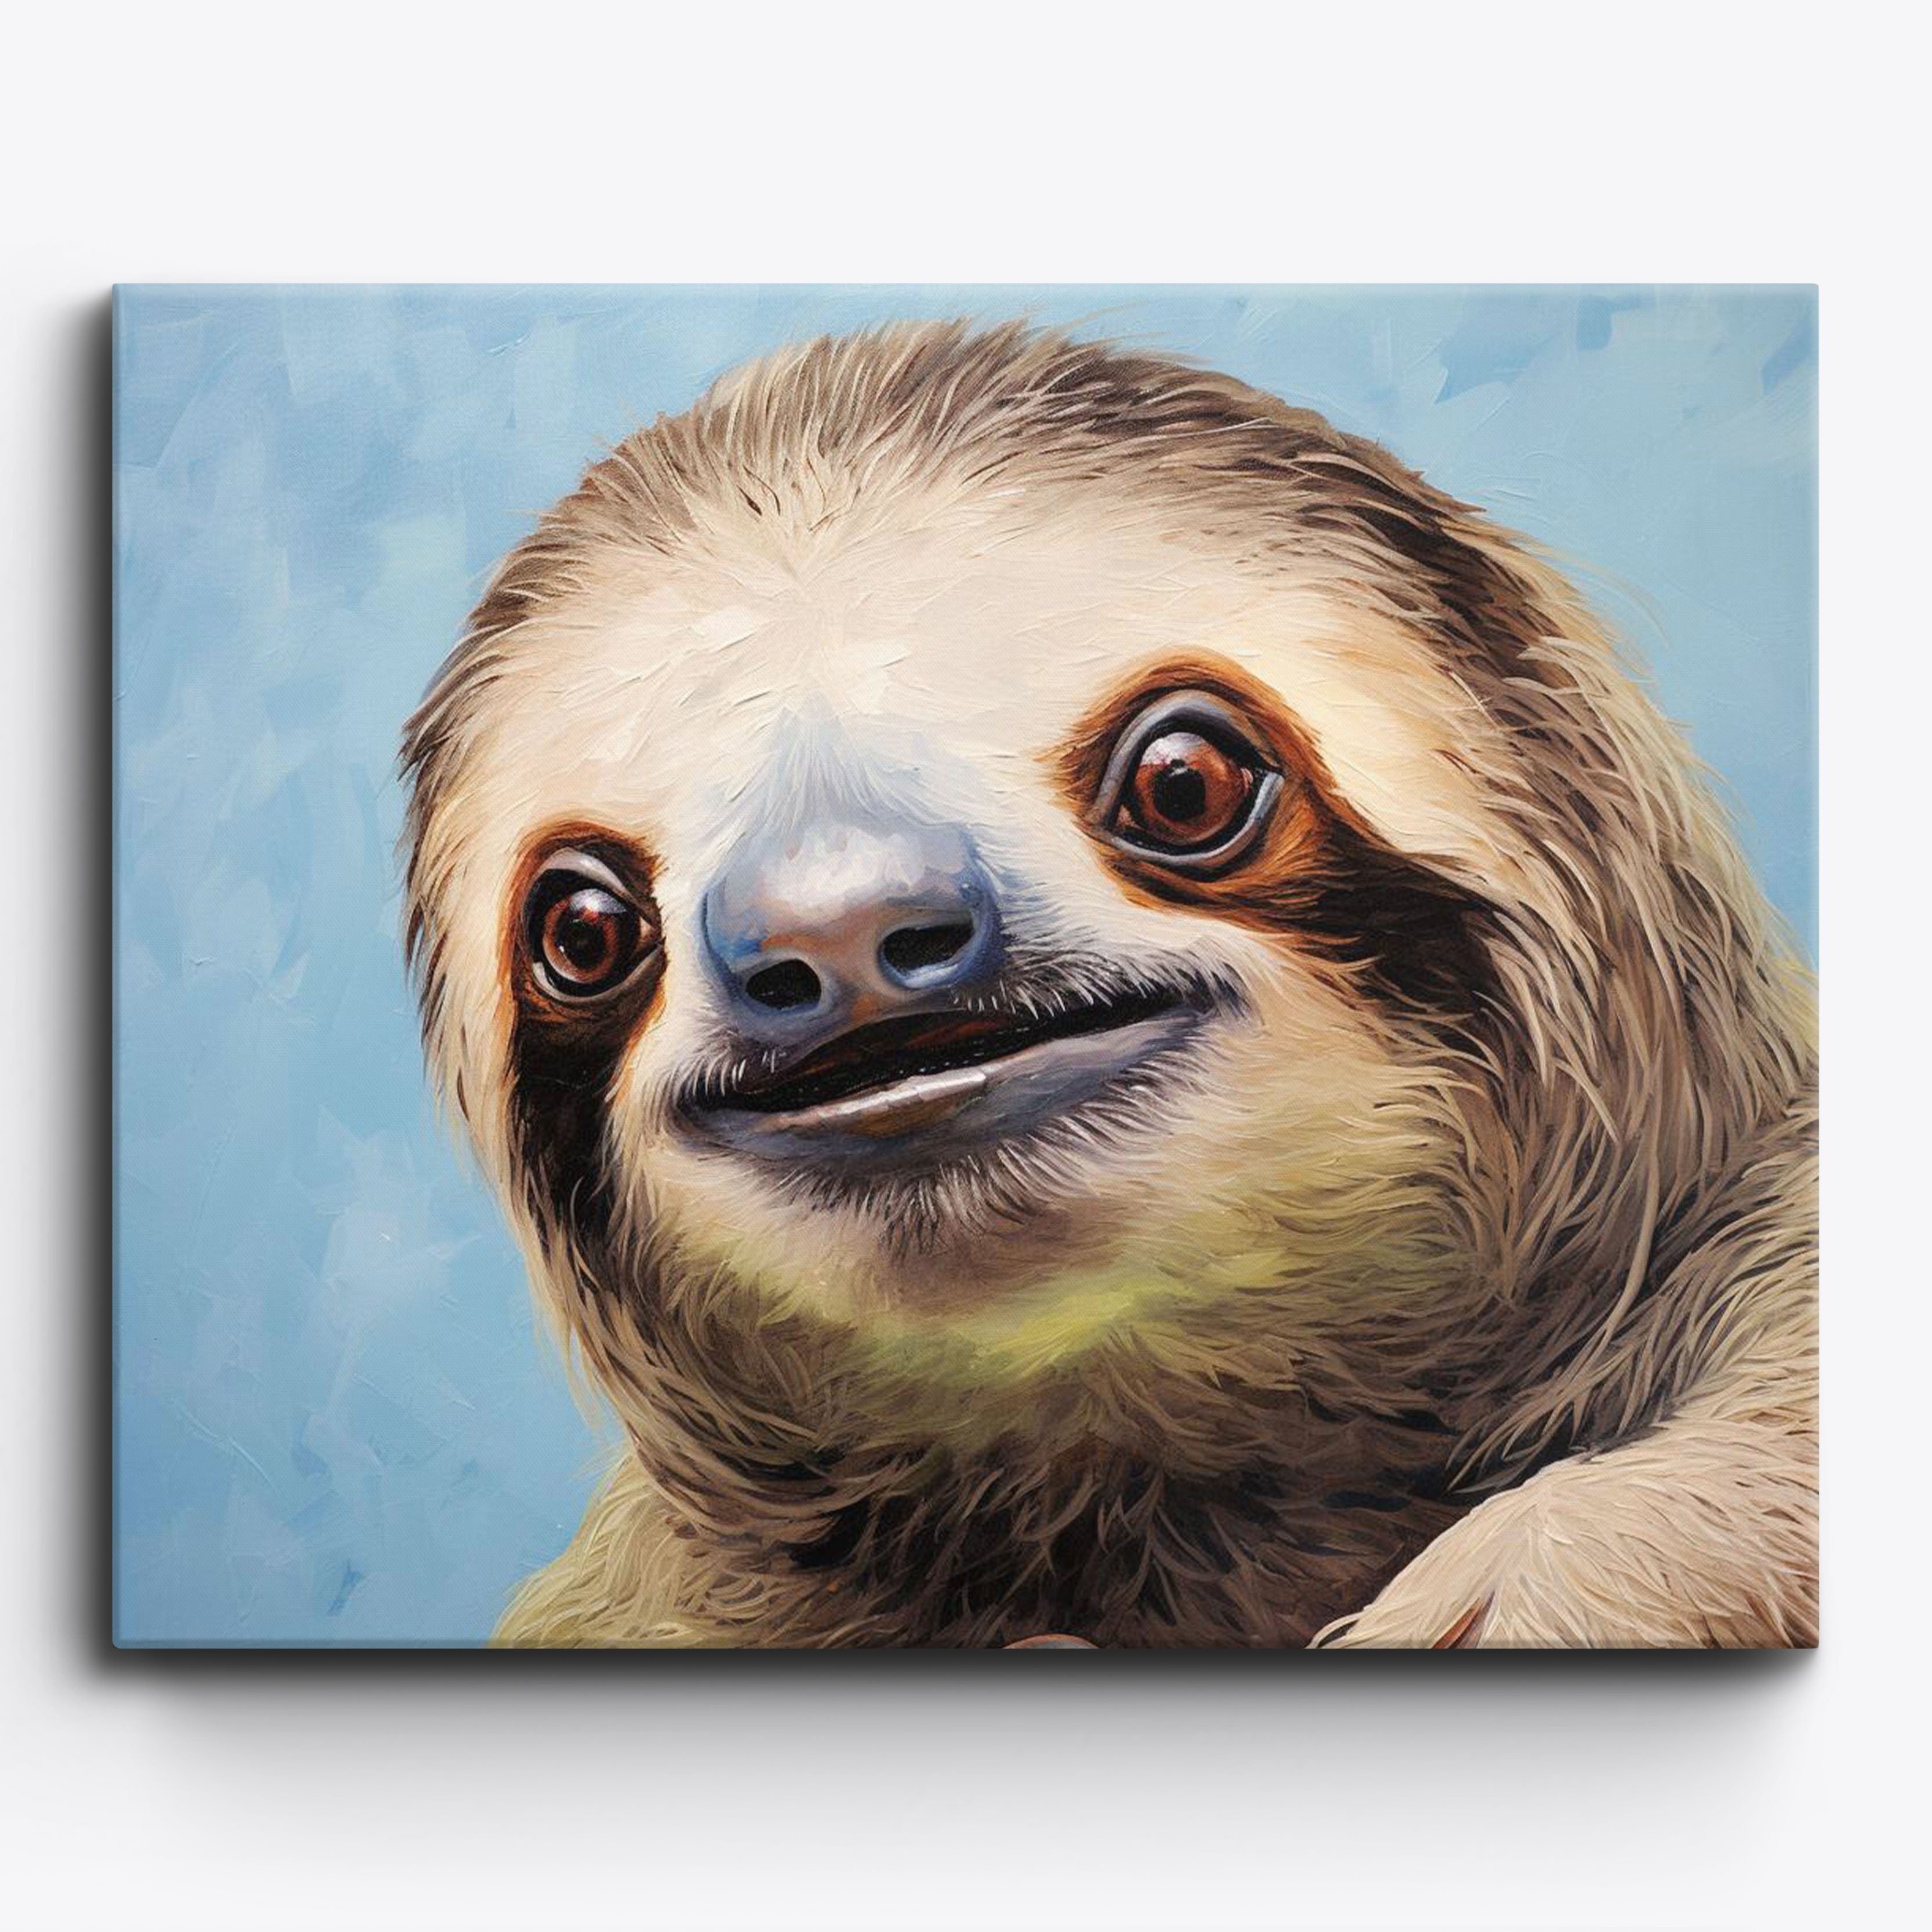 Smiling Sloth In Blue No Frame